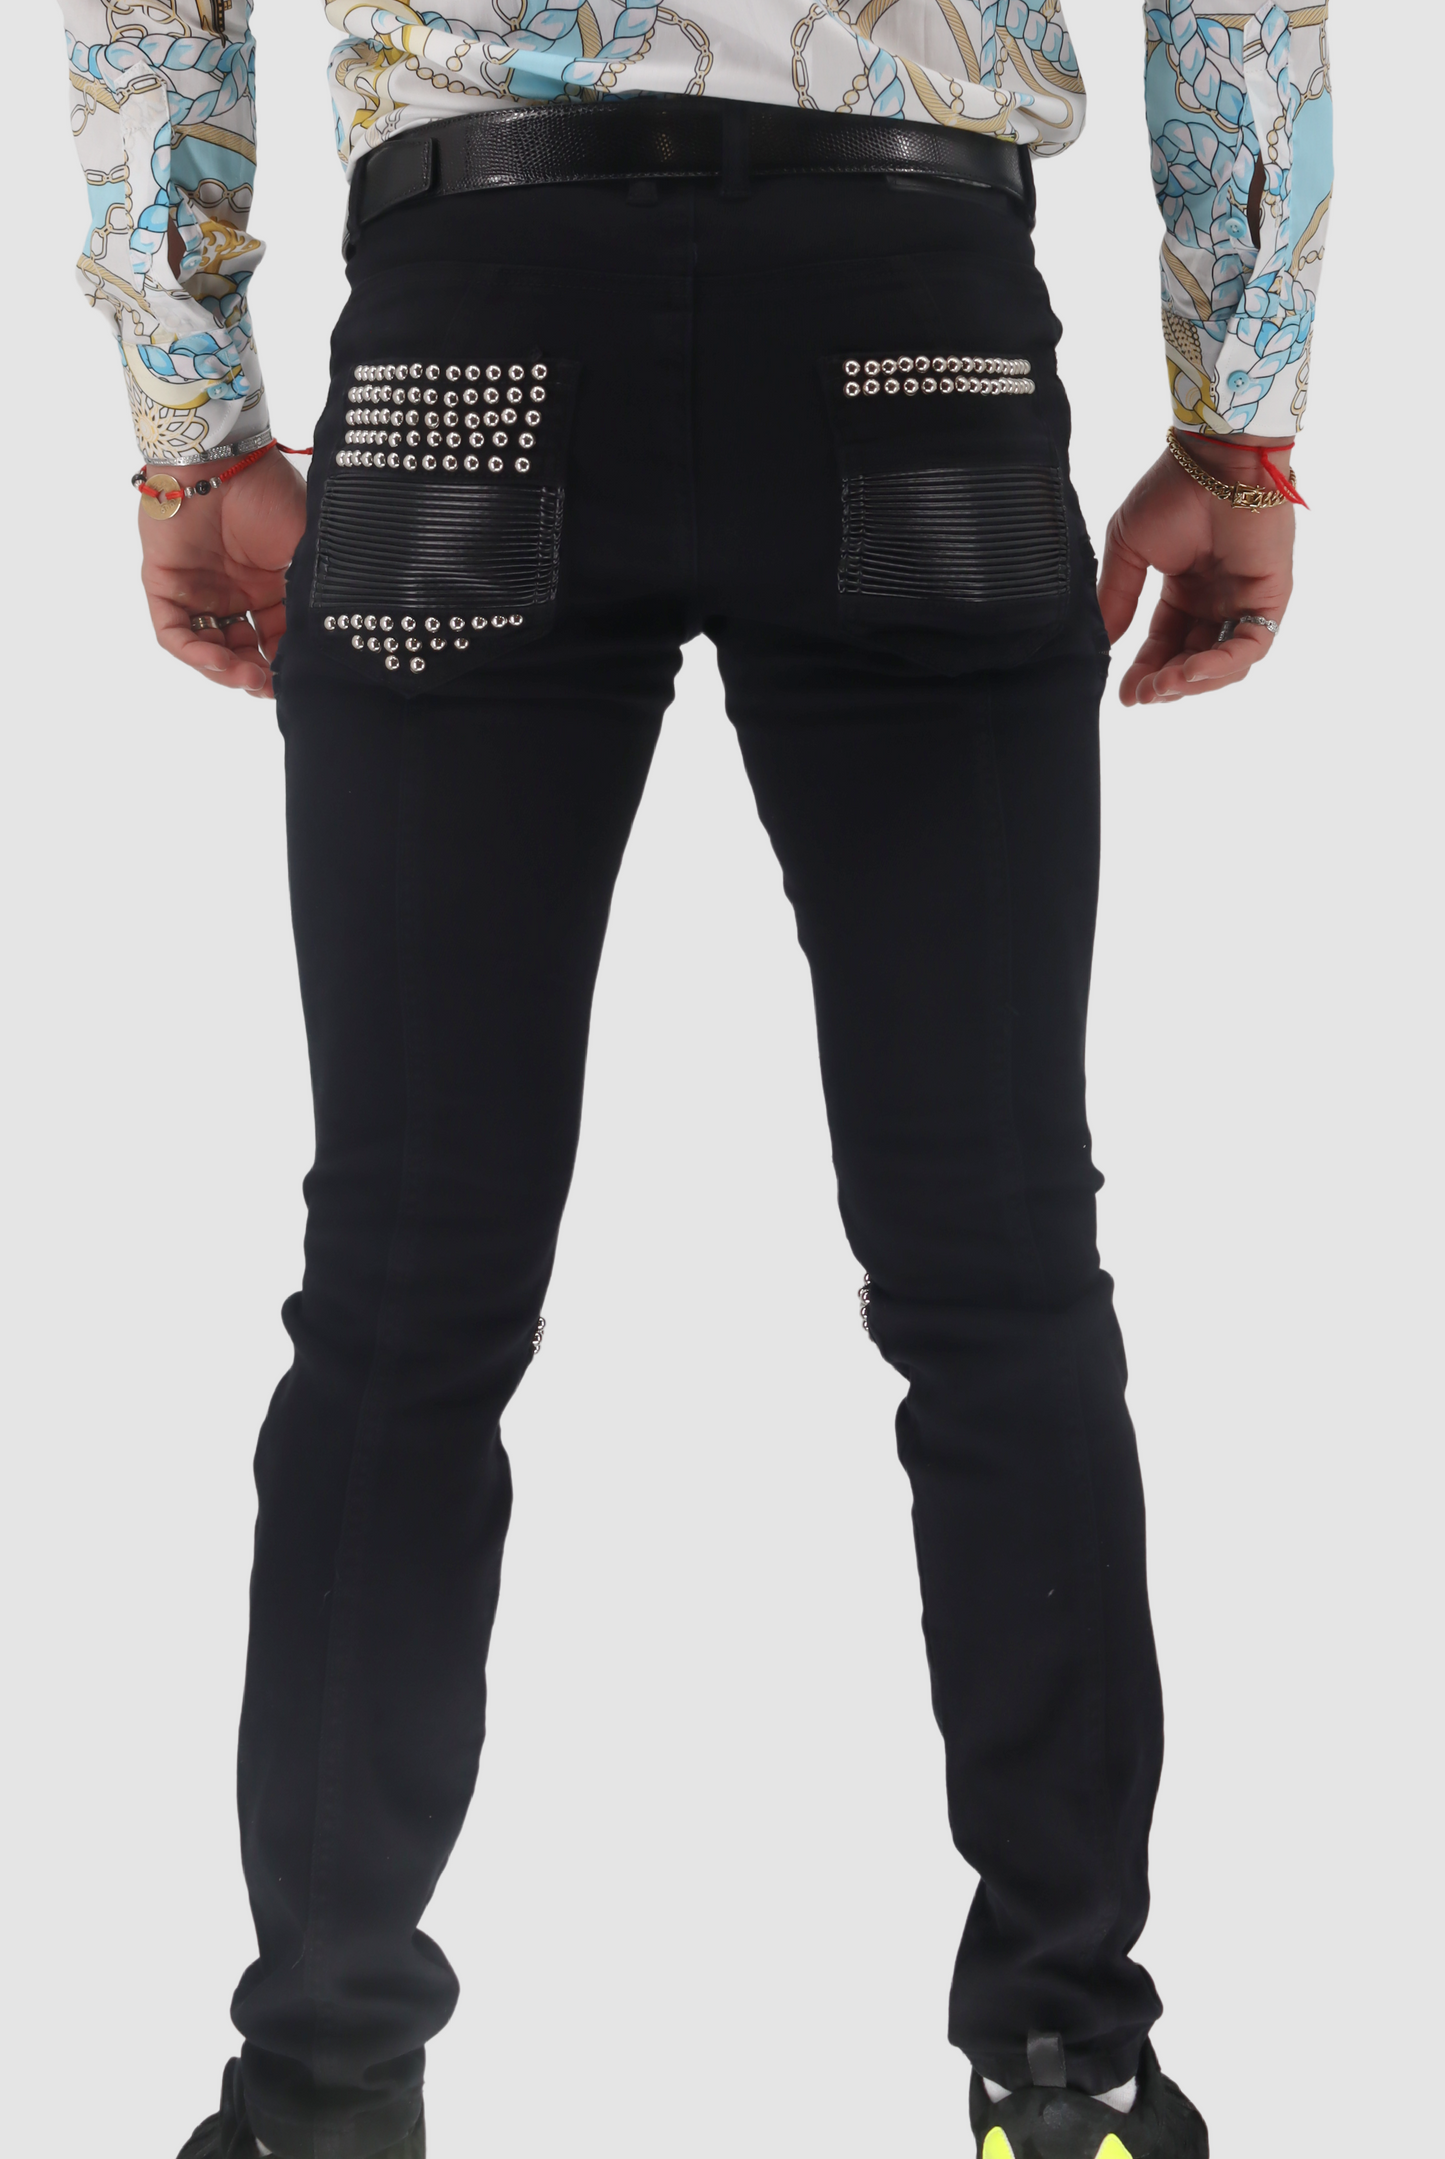 BAROCCO Black Jeans W Silver Studs